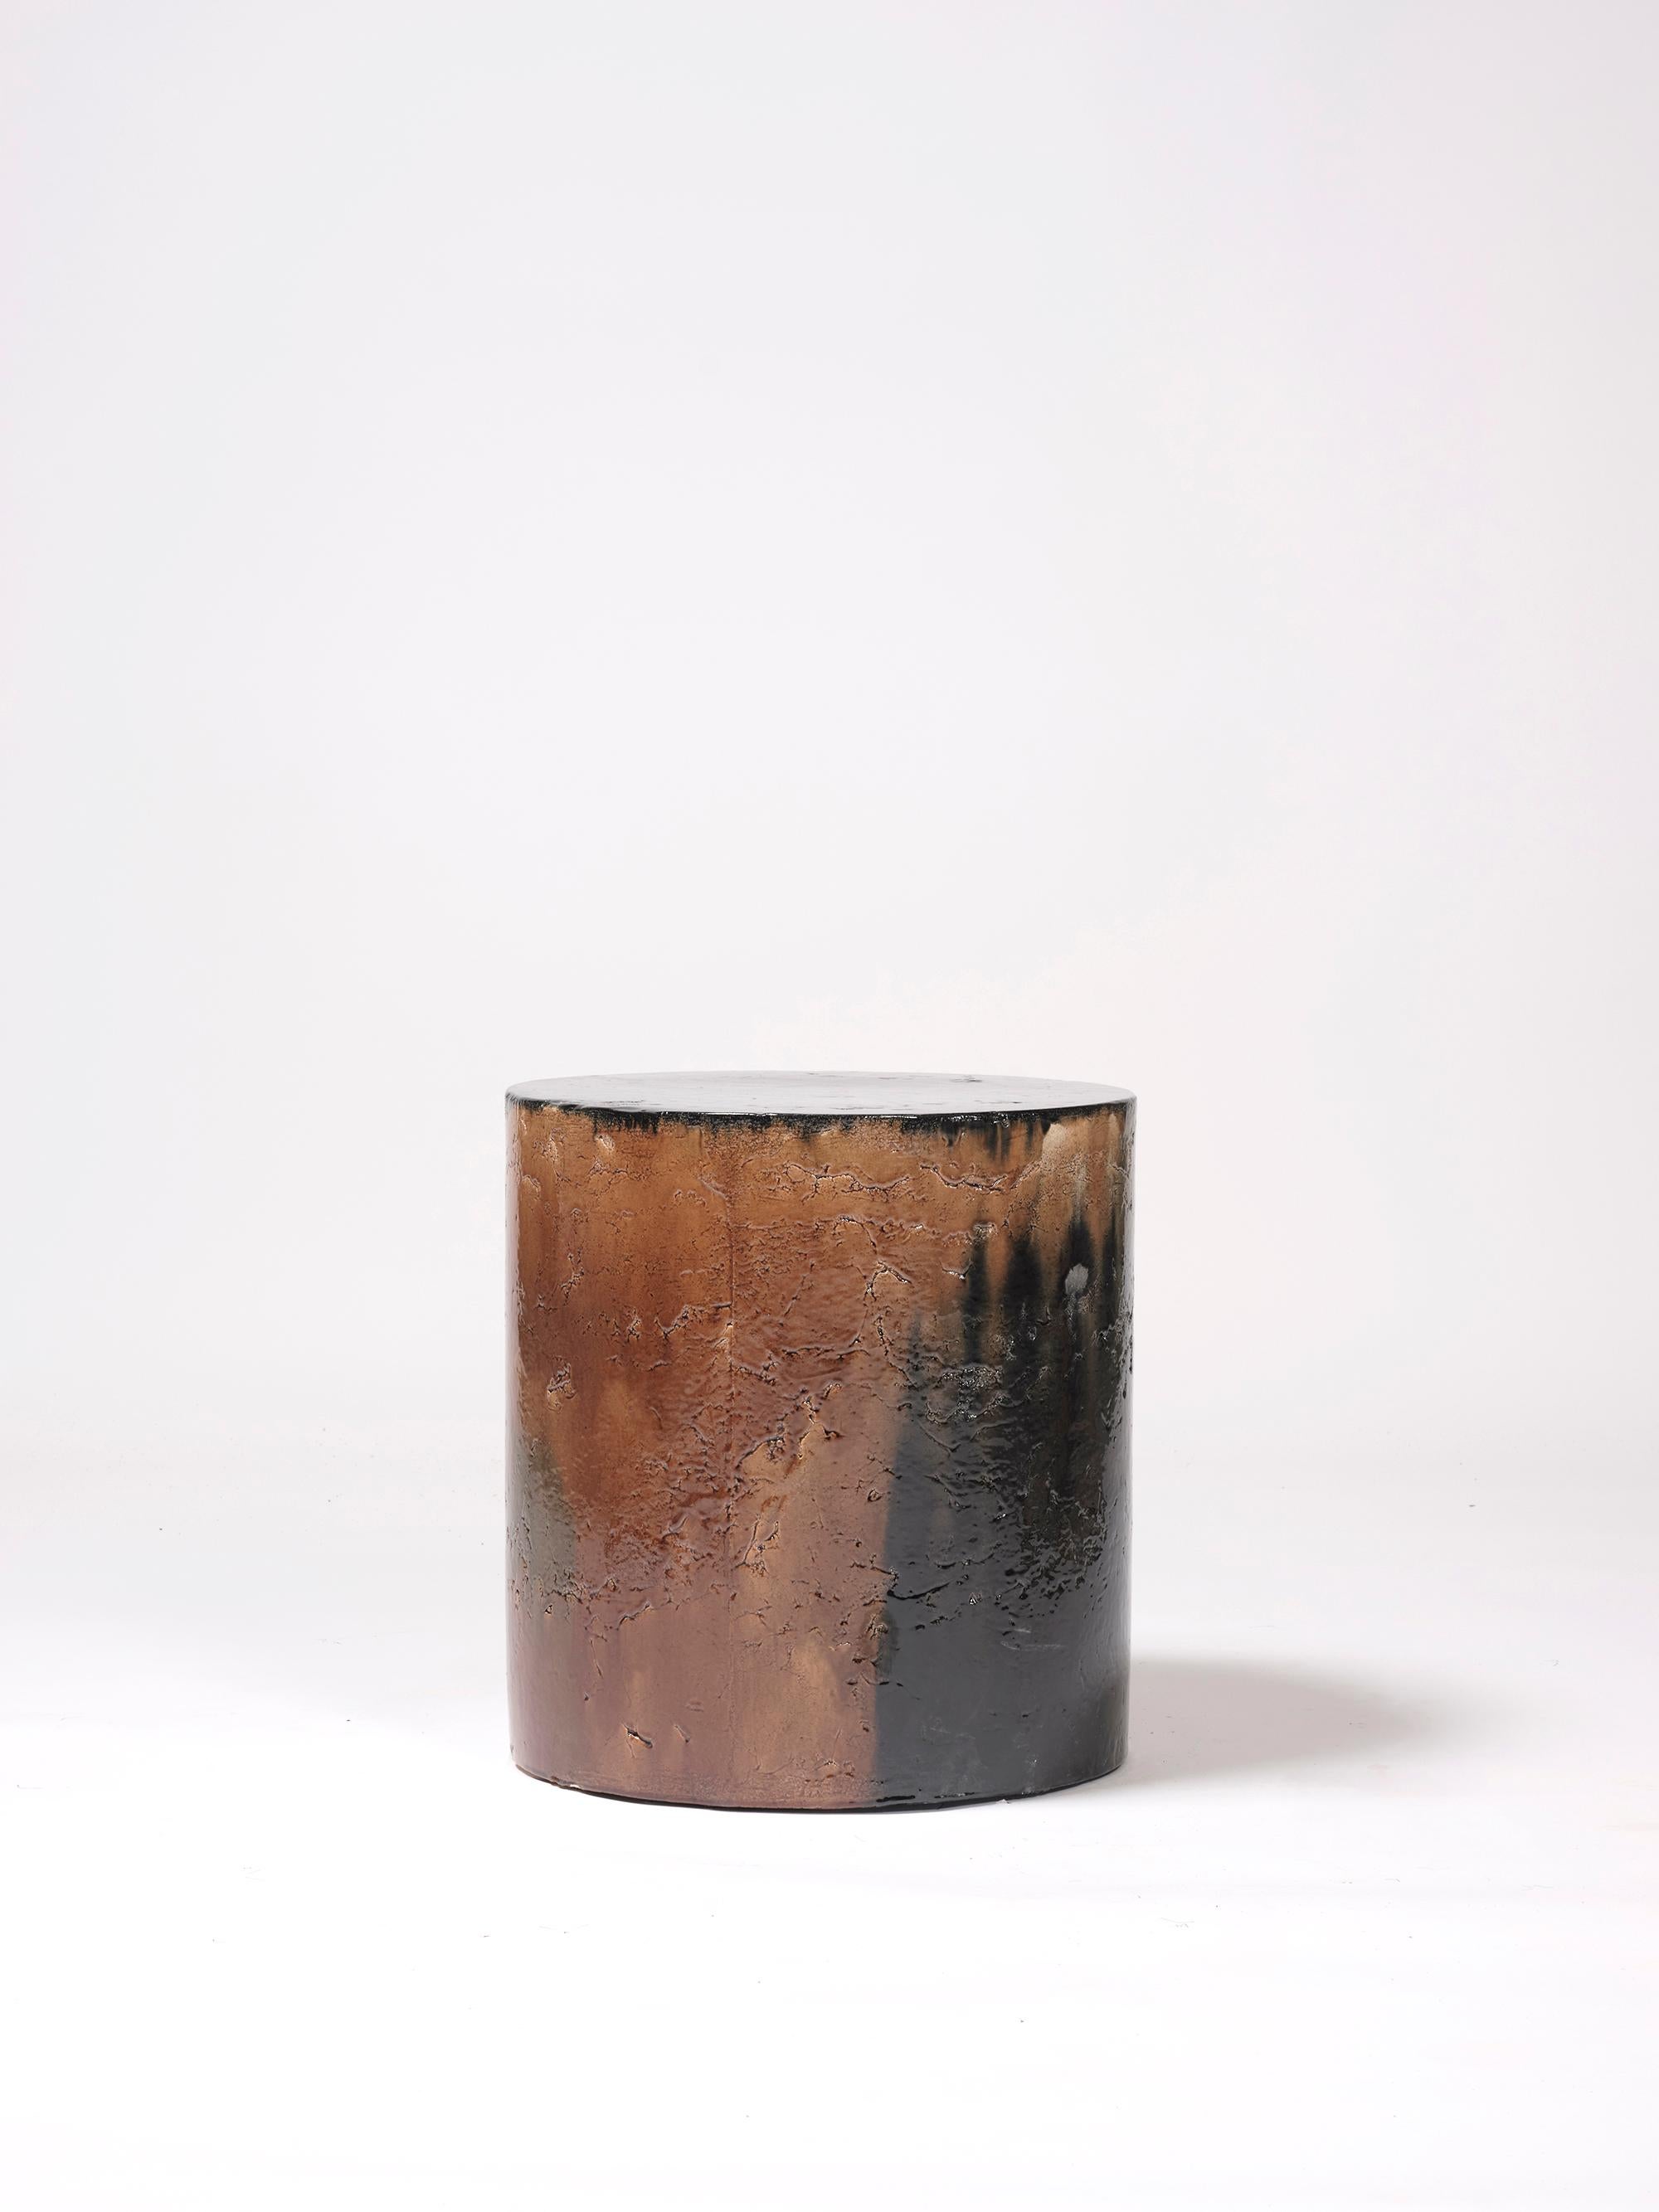 Enameled Contemporary Ceramic Side Table Column Stool Black Green Brown Glazed Stoneware